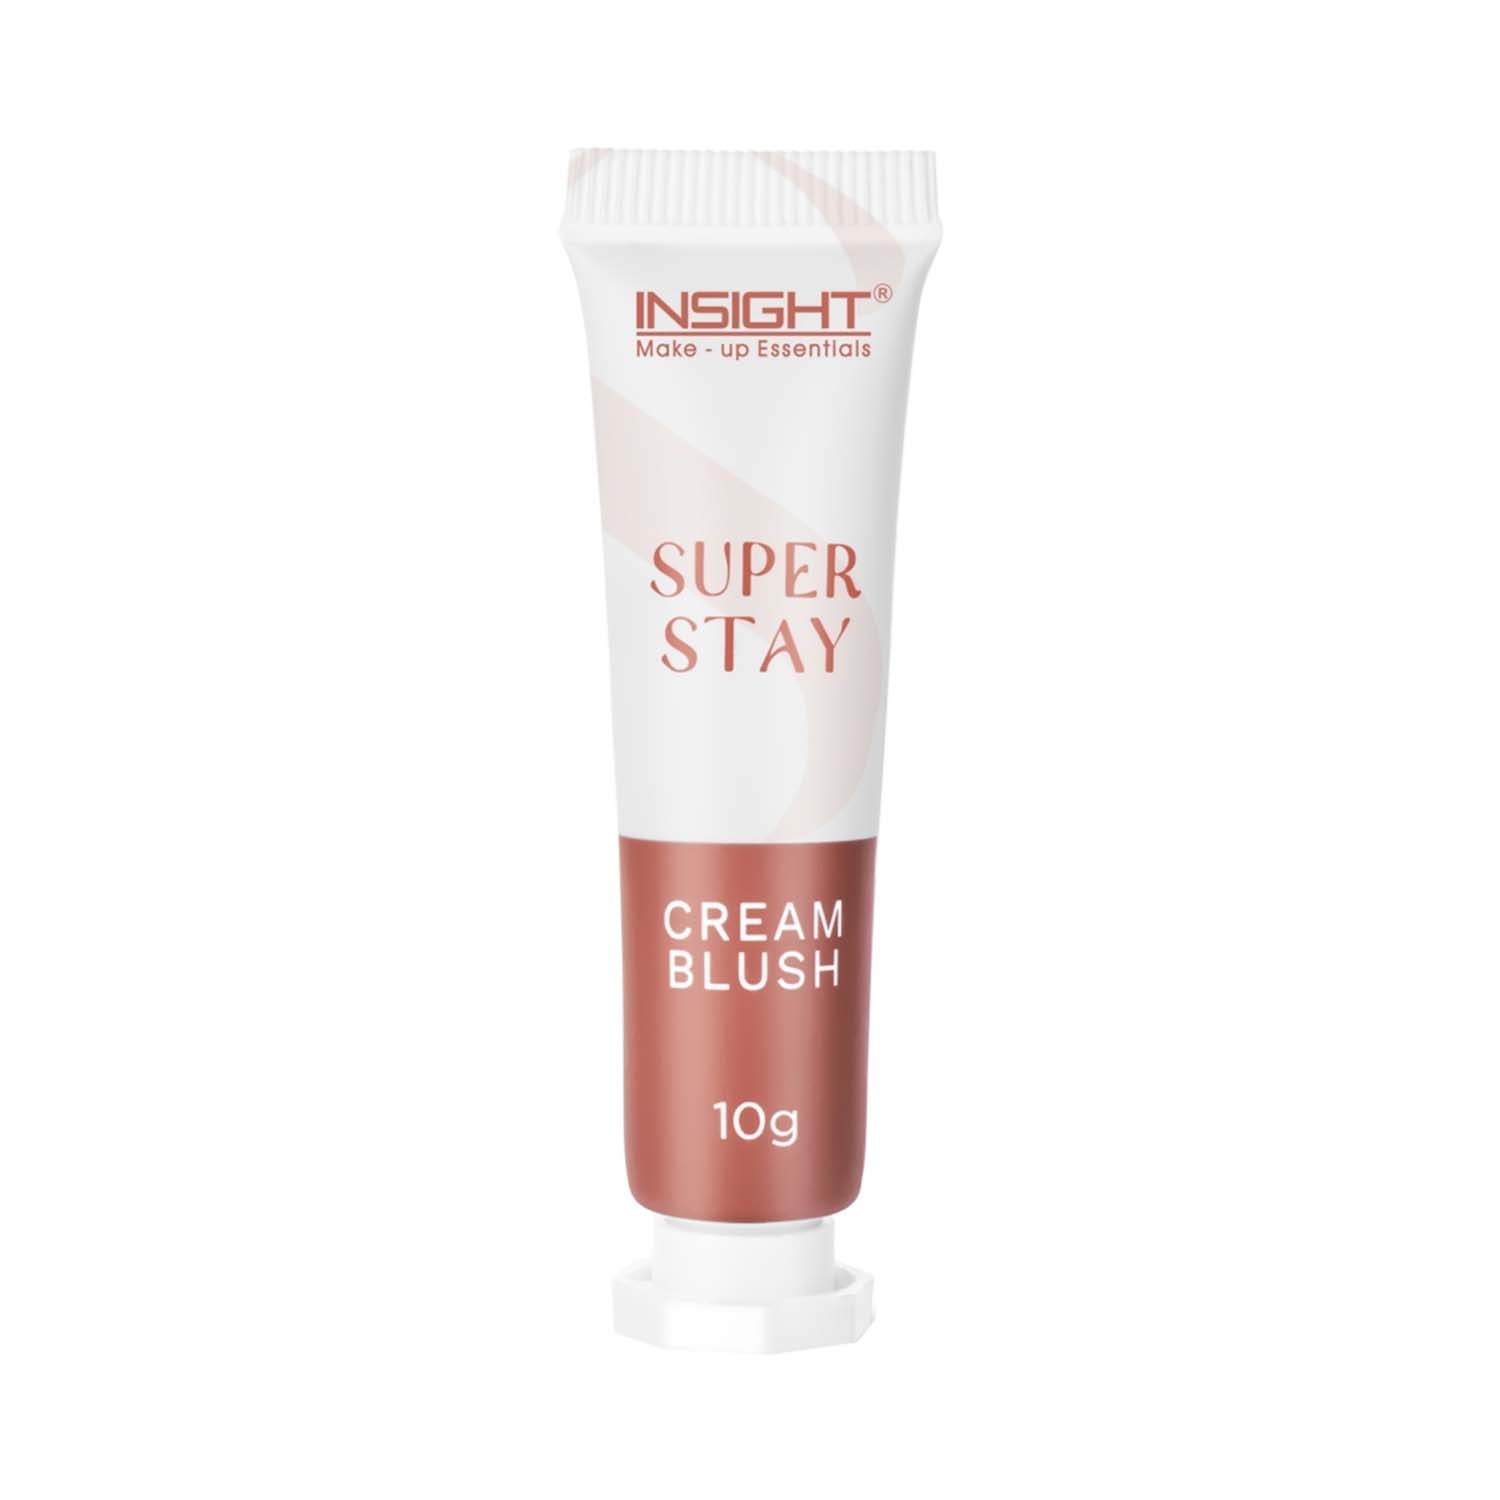 Insight Cosmetics | Insight Cosmetics Super Stay Cream Blush - Apricot Jelly (10g)